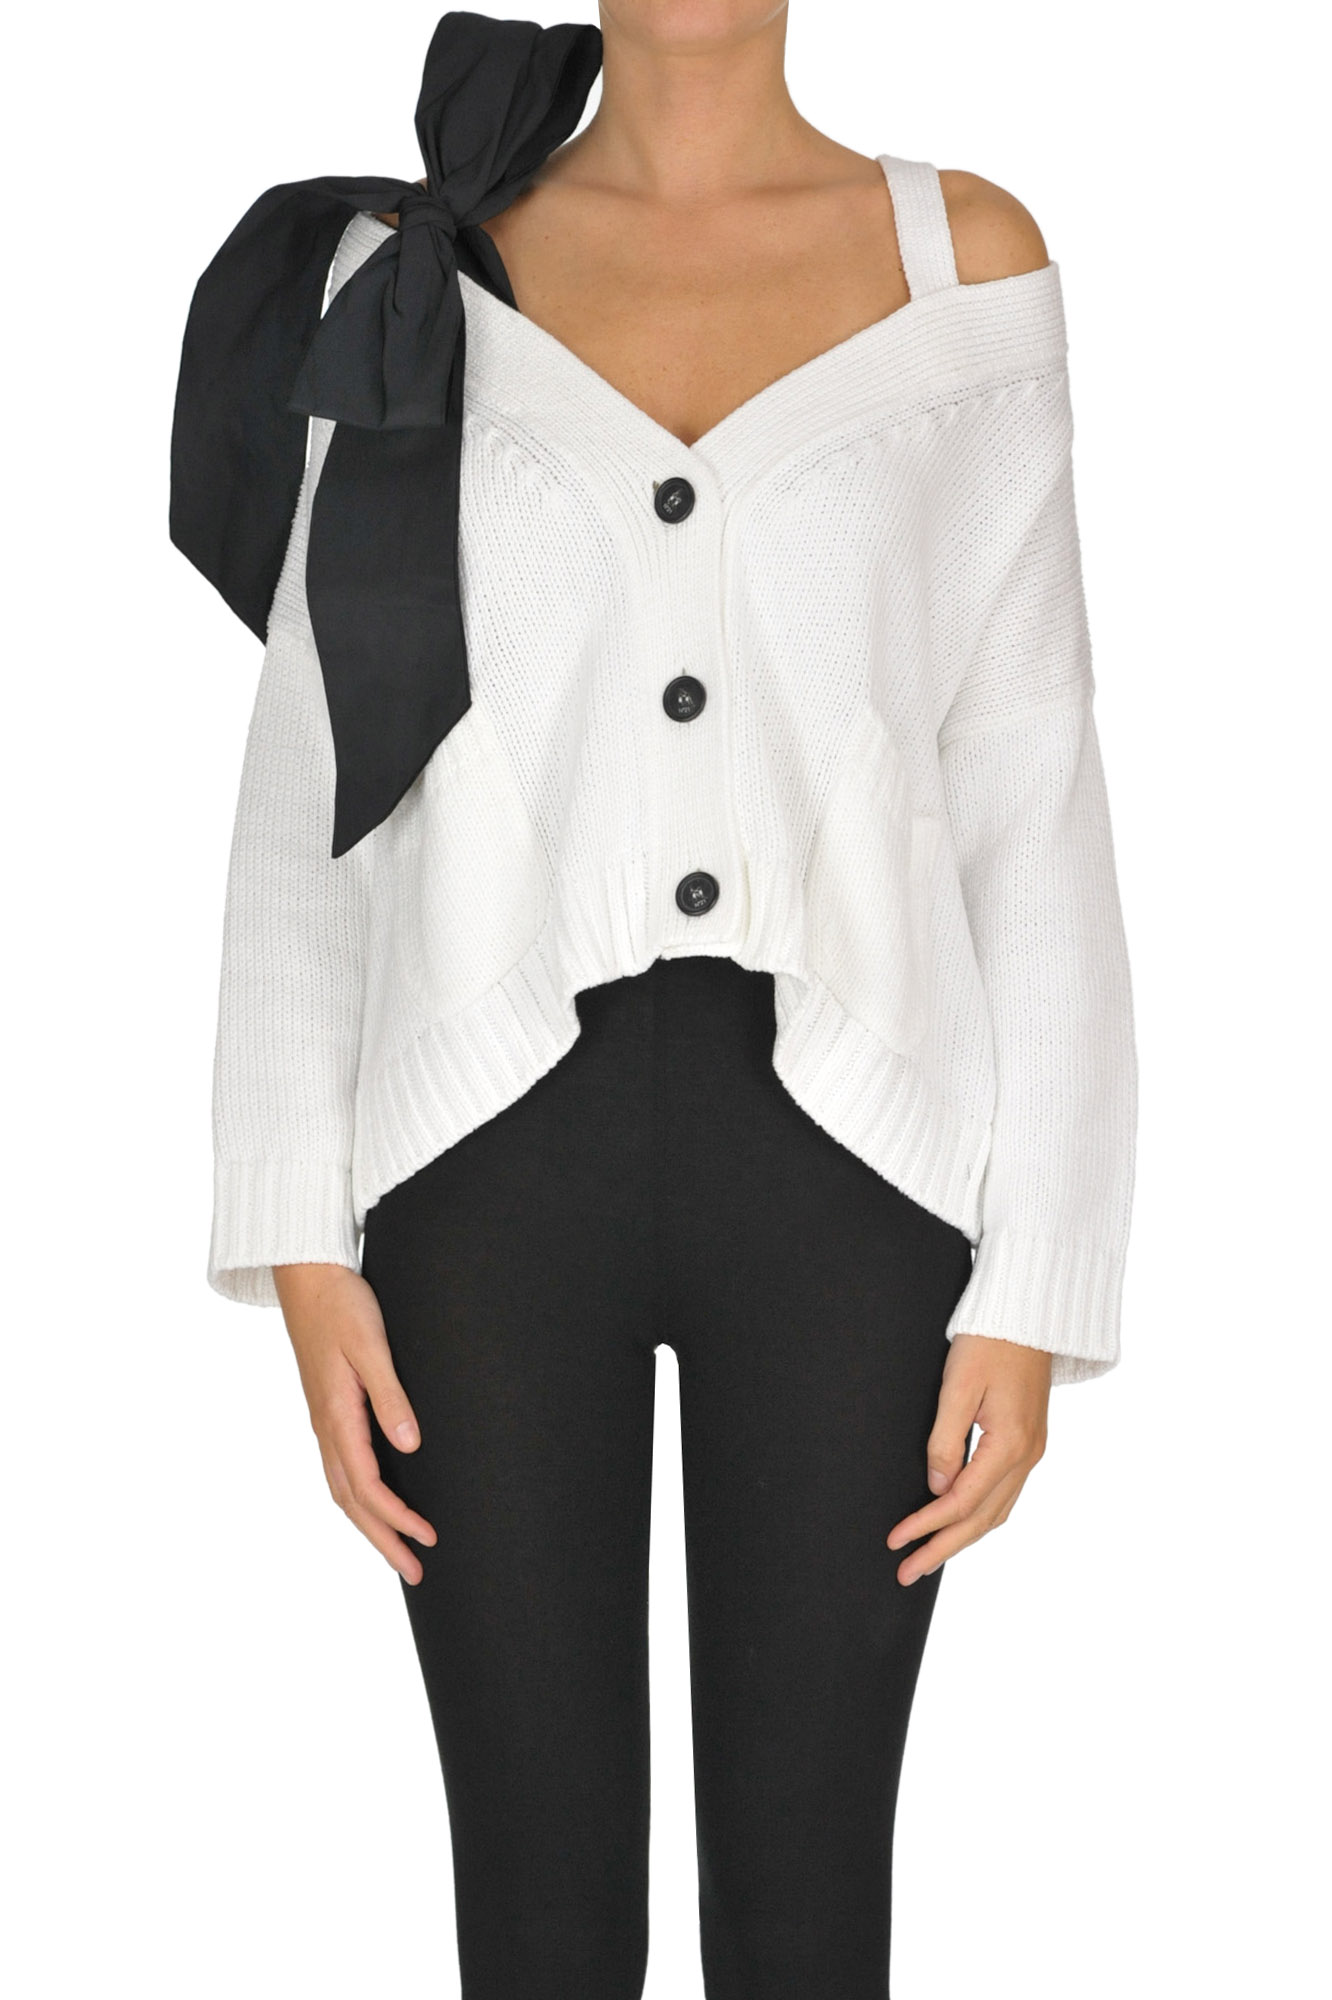 N°21 Maxi bow cardigan - Buy online on Glamest Fashion Outlet - Glamest ...